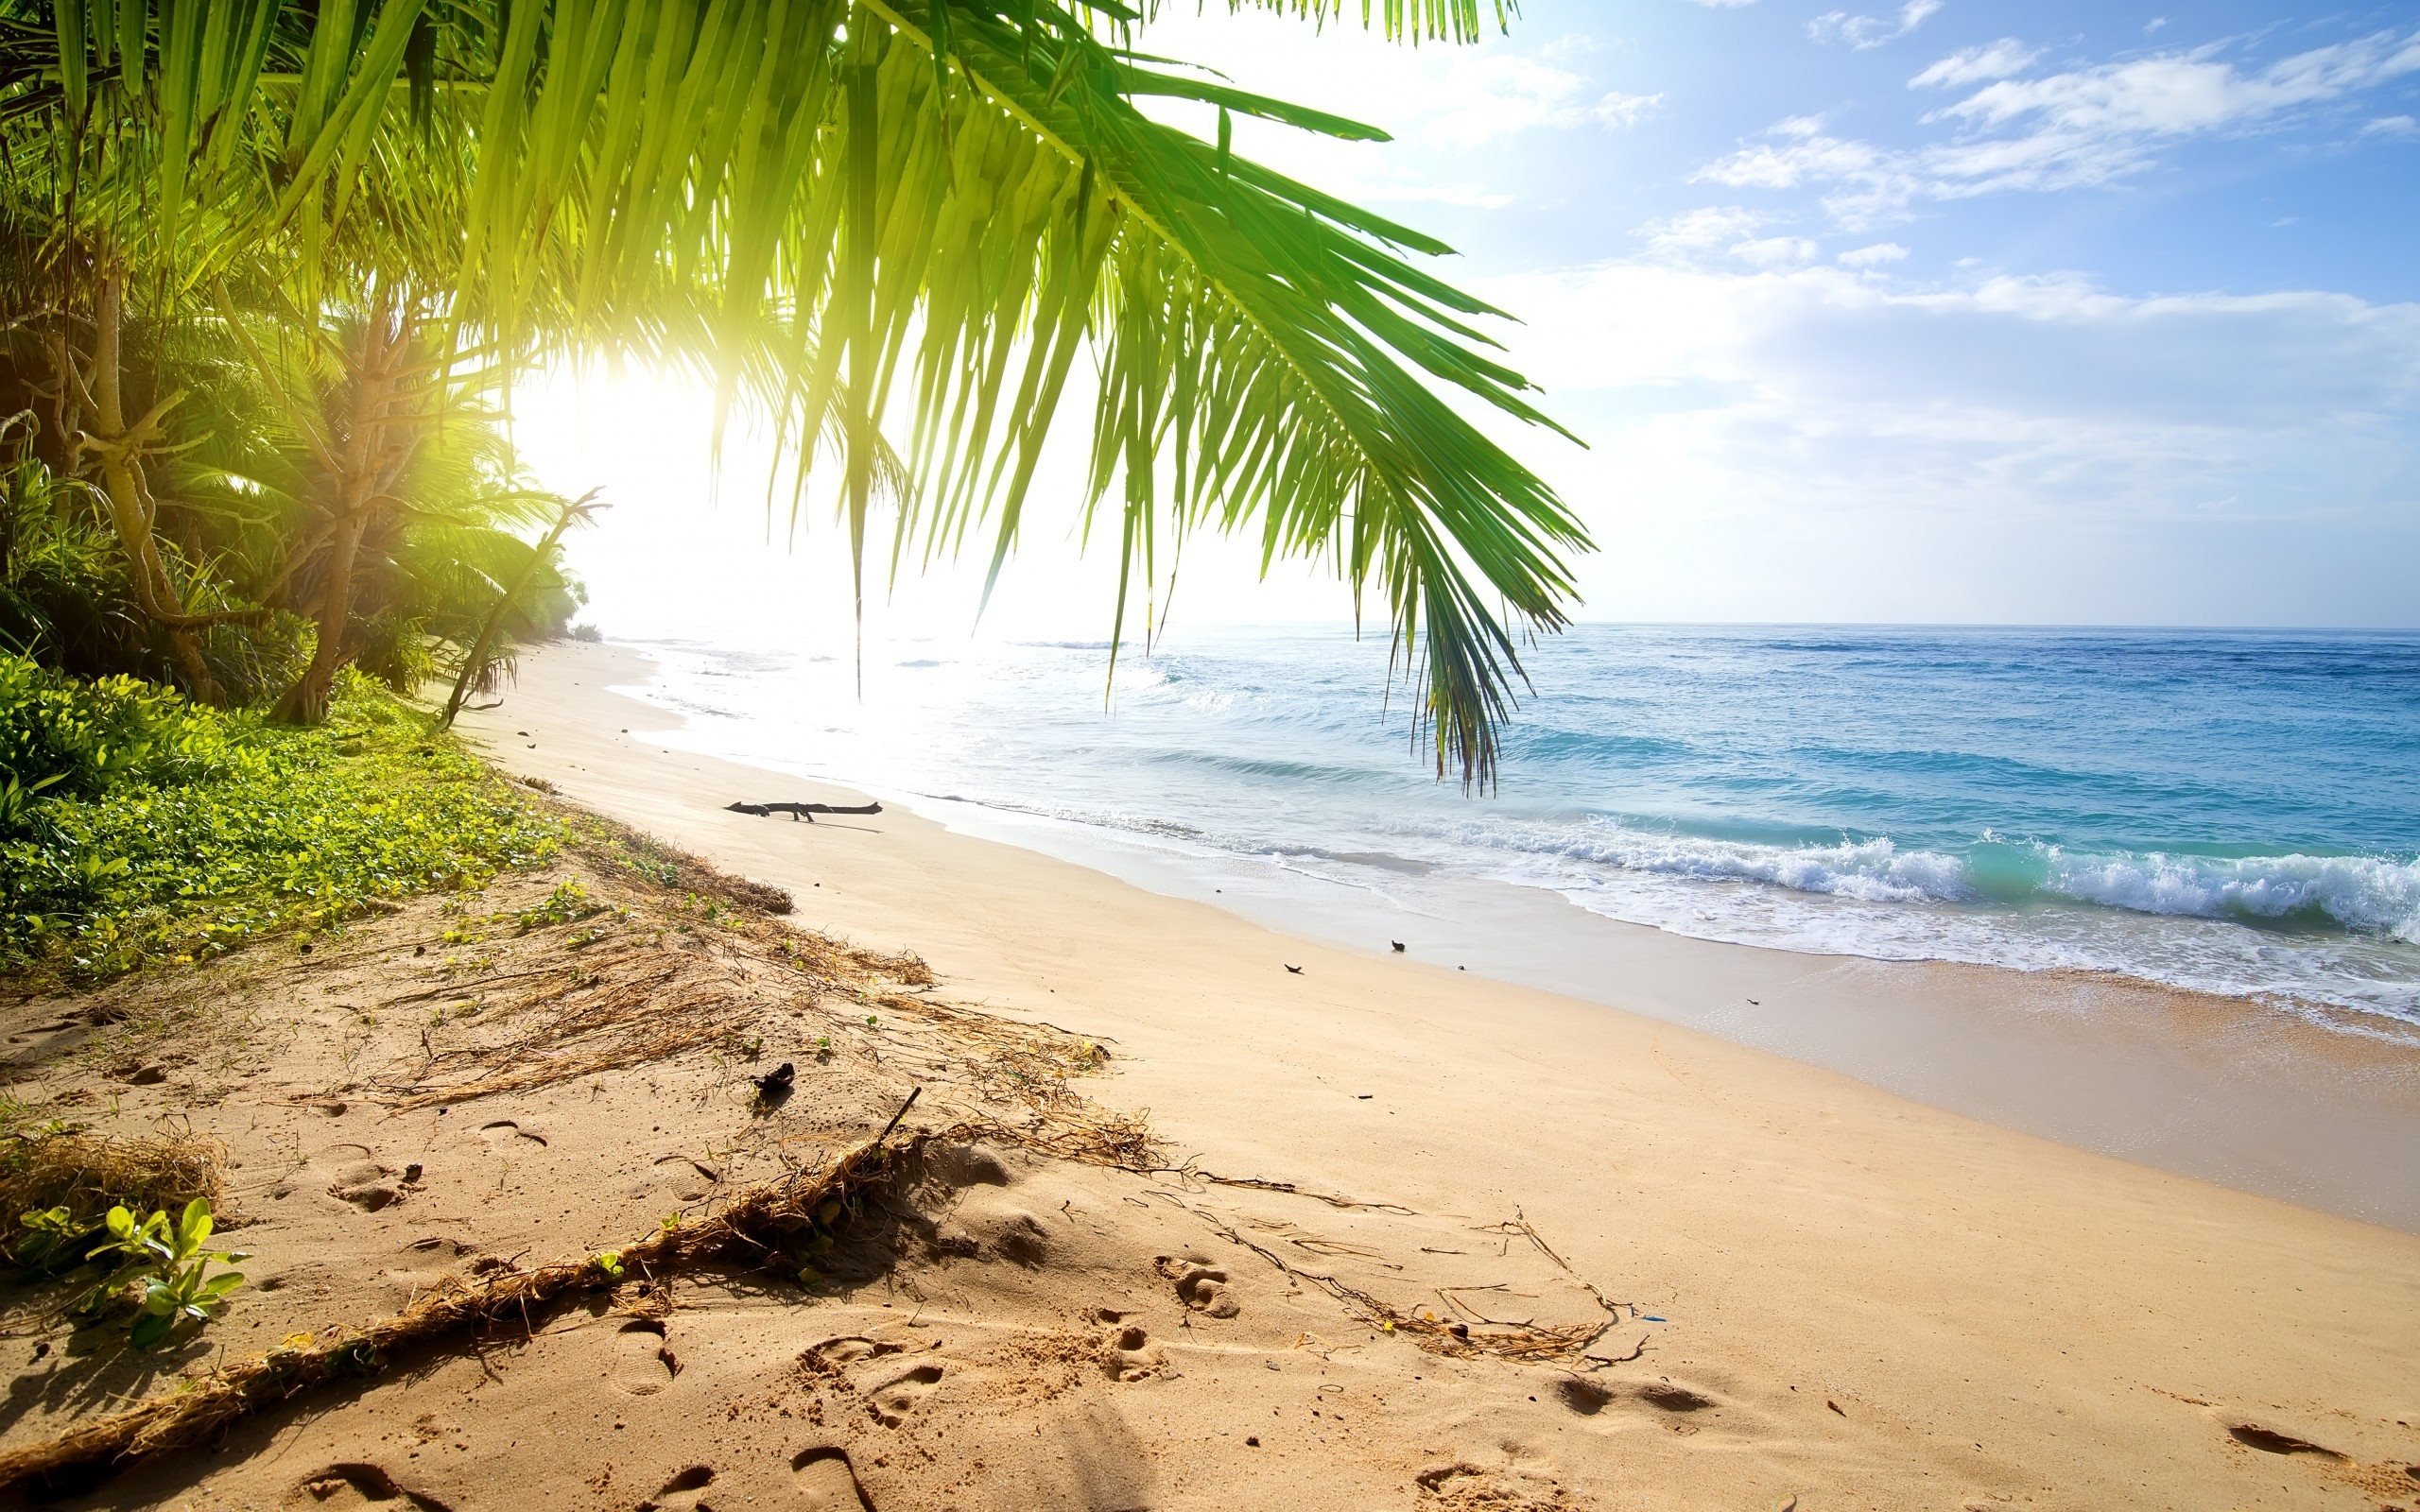 Download wallpaper beach, palm trees, tropical island